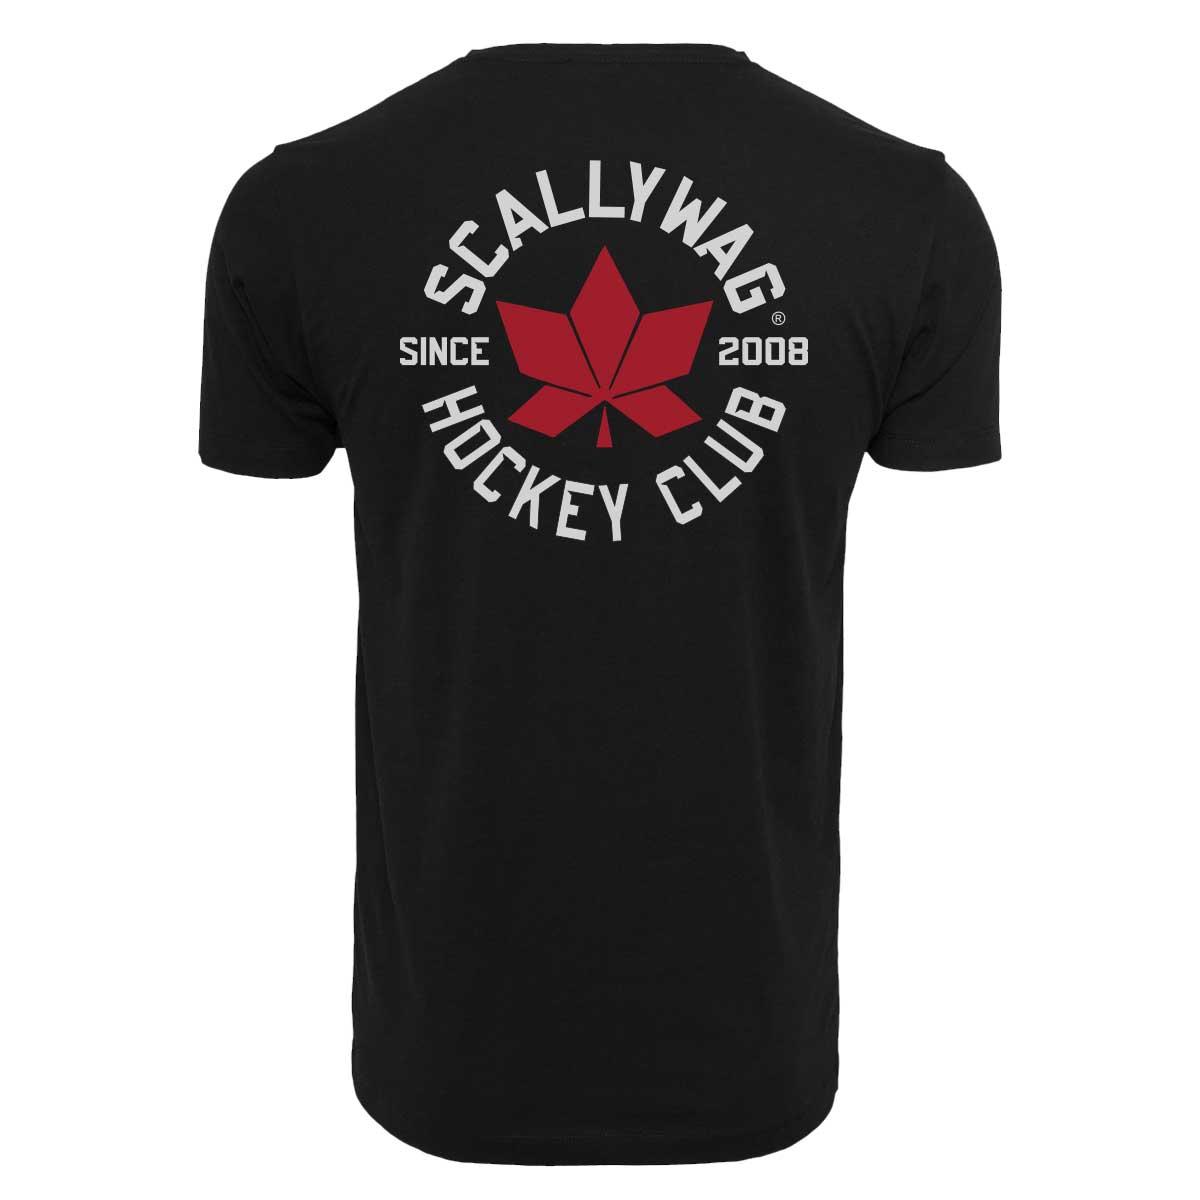 SCALLYWAG® T-Shirt HOCKEY CLUB (Backprint)